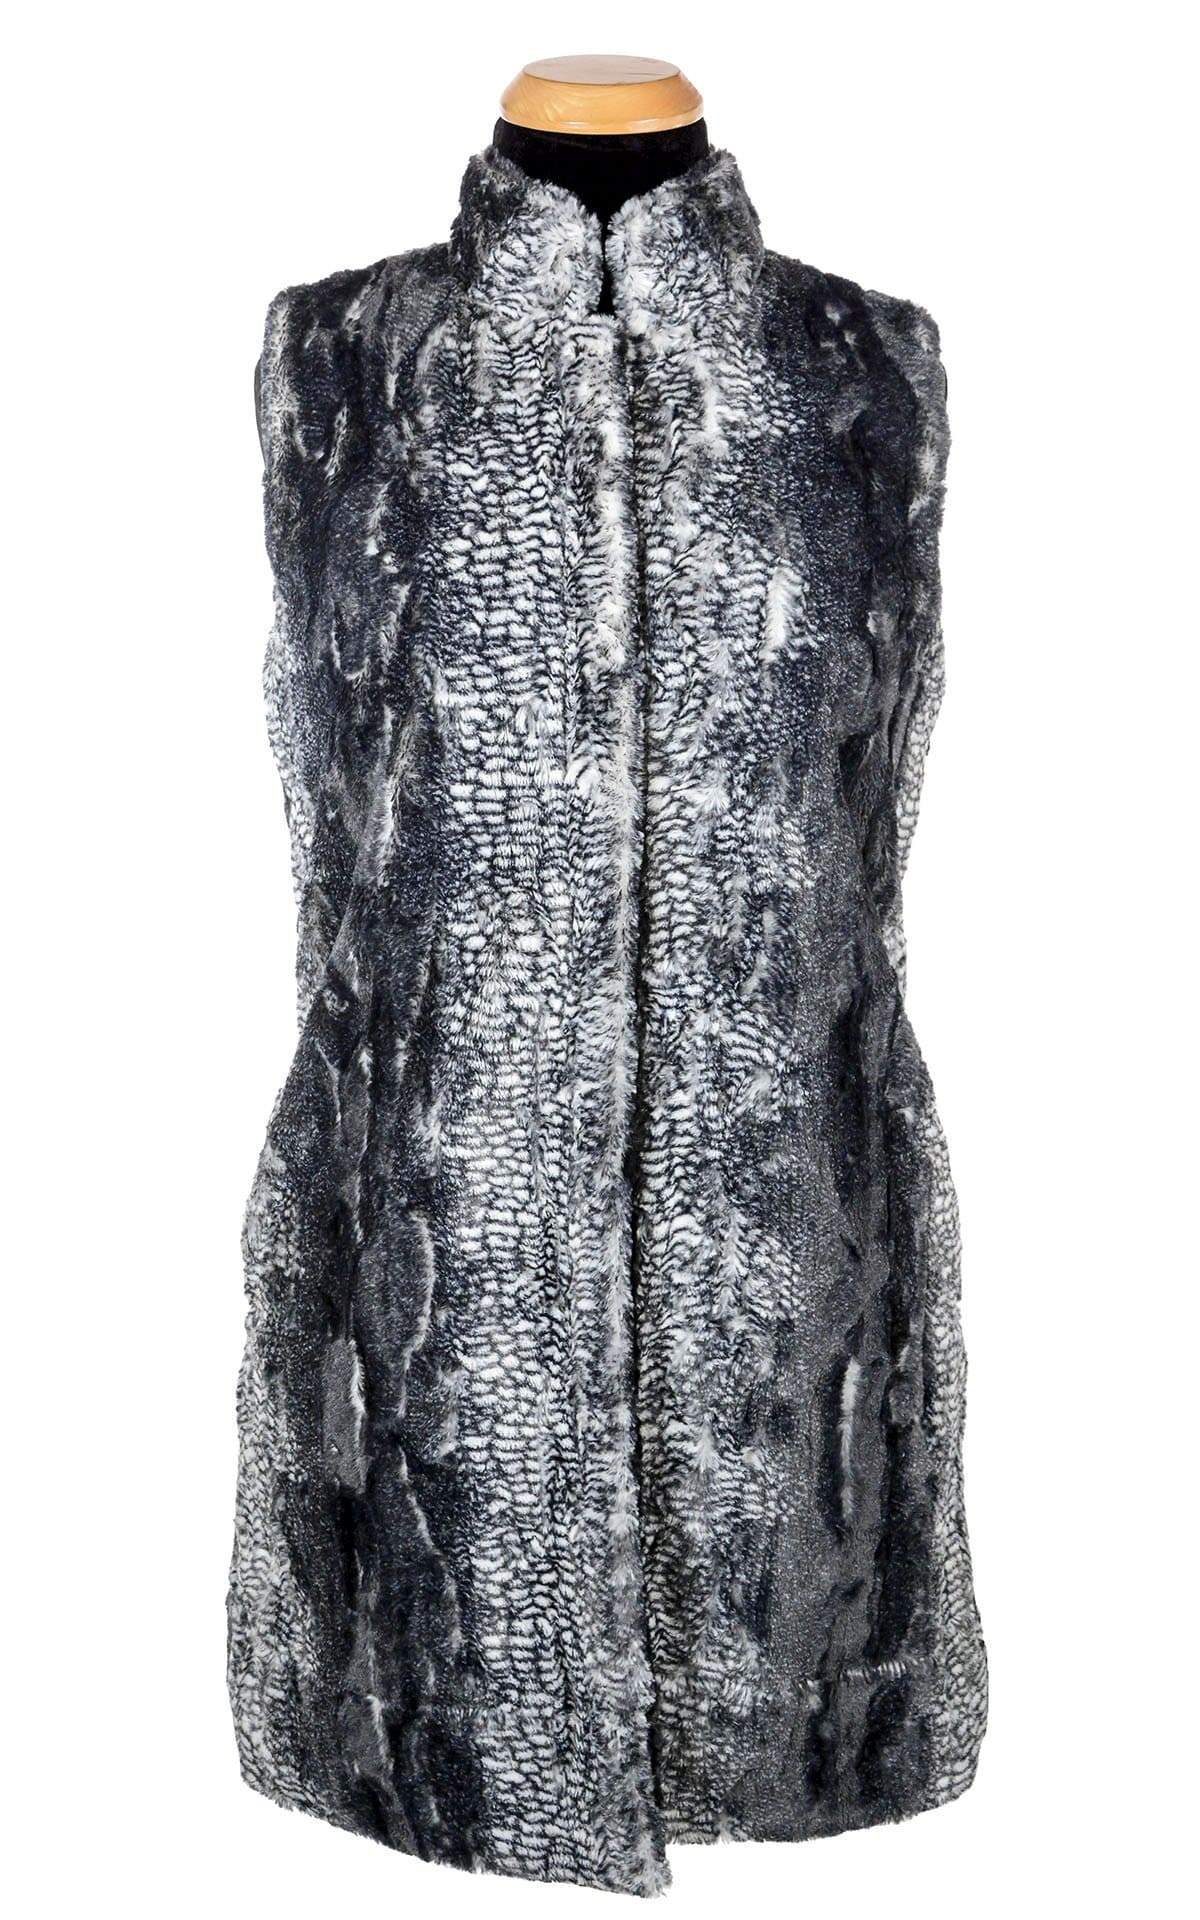 Mandarin Vest - Luxury Faux Fur in Black Mamba with Cuddly Fur in Black